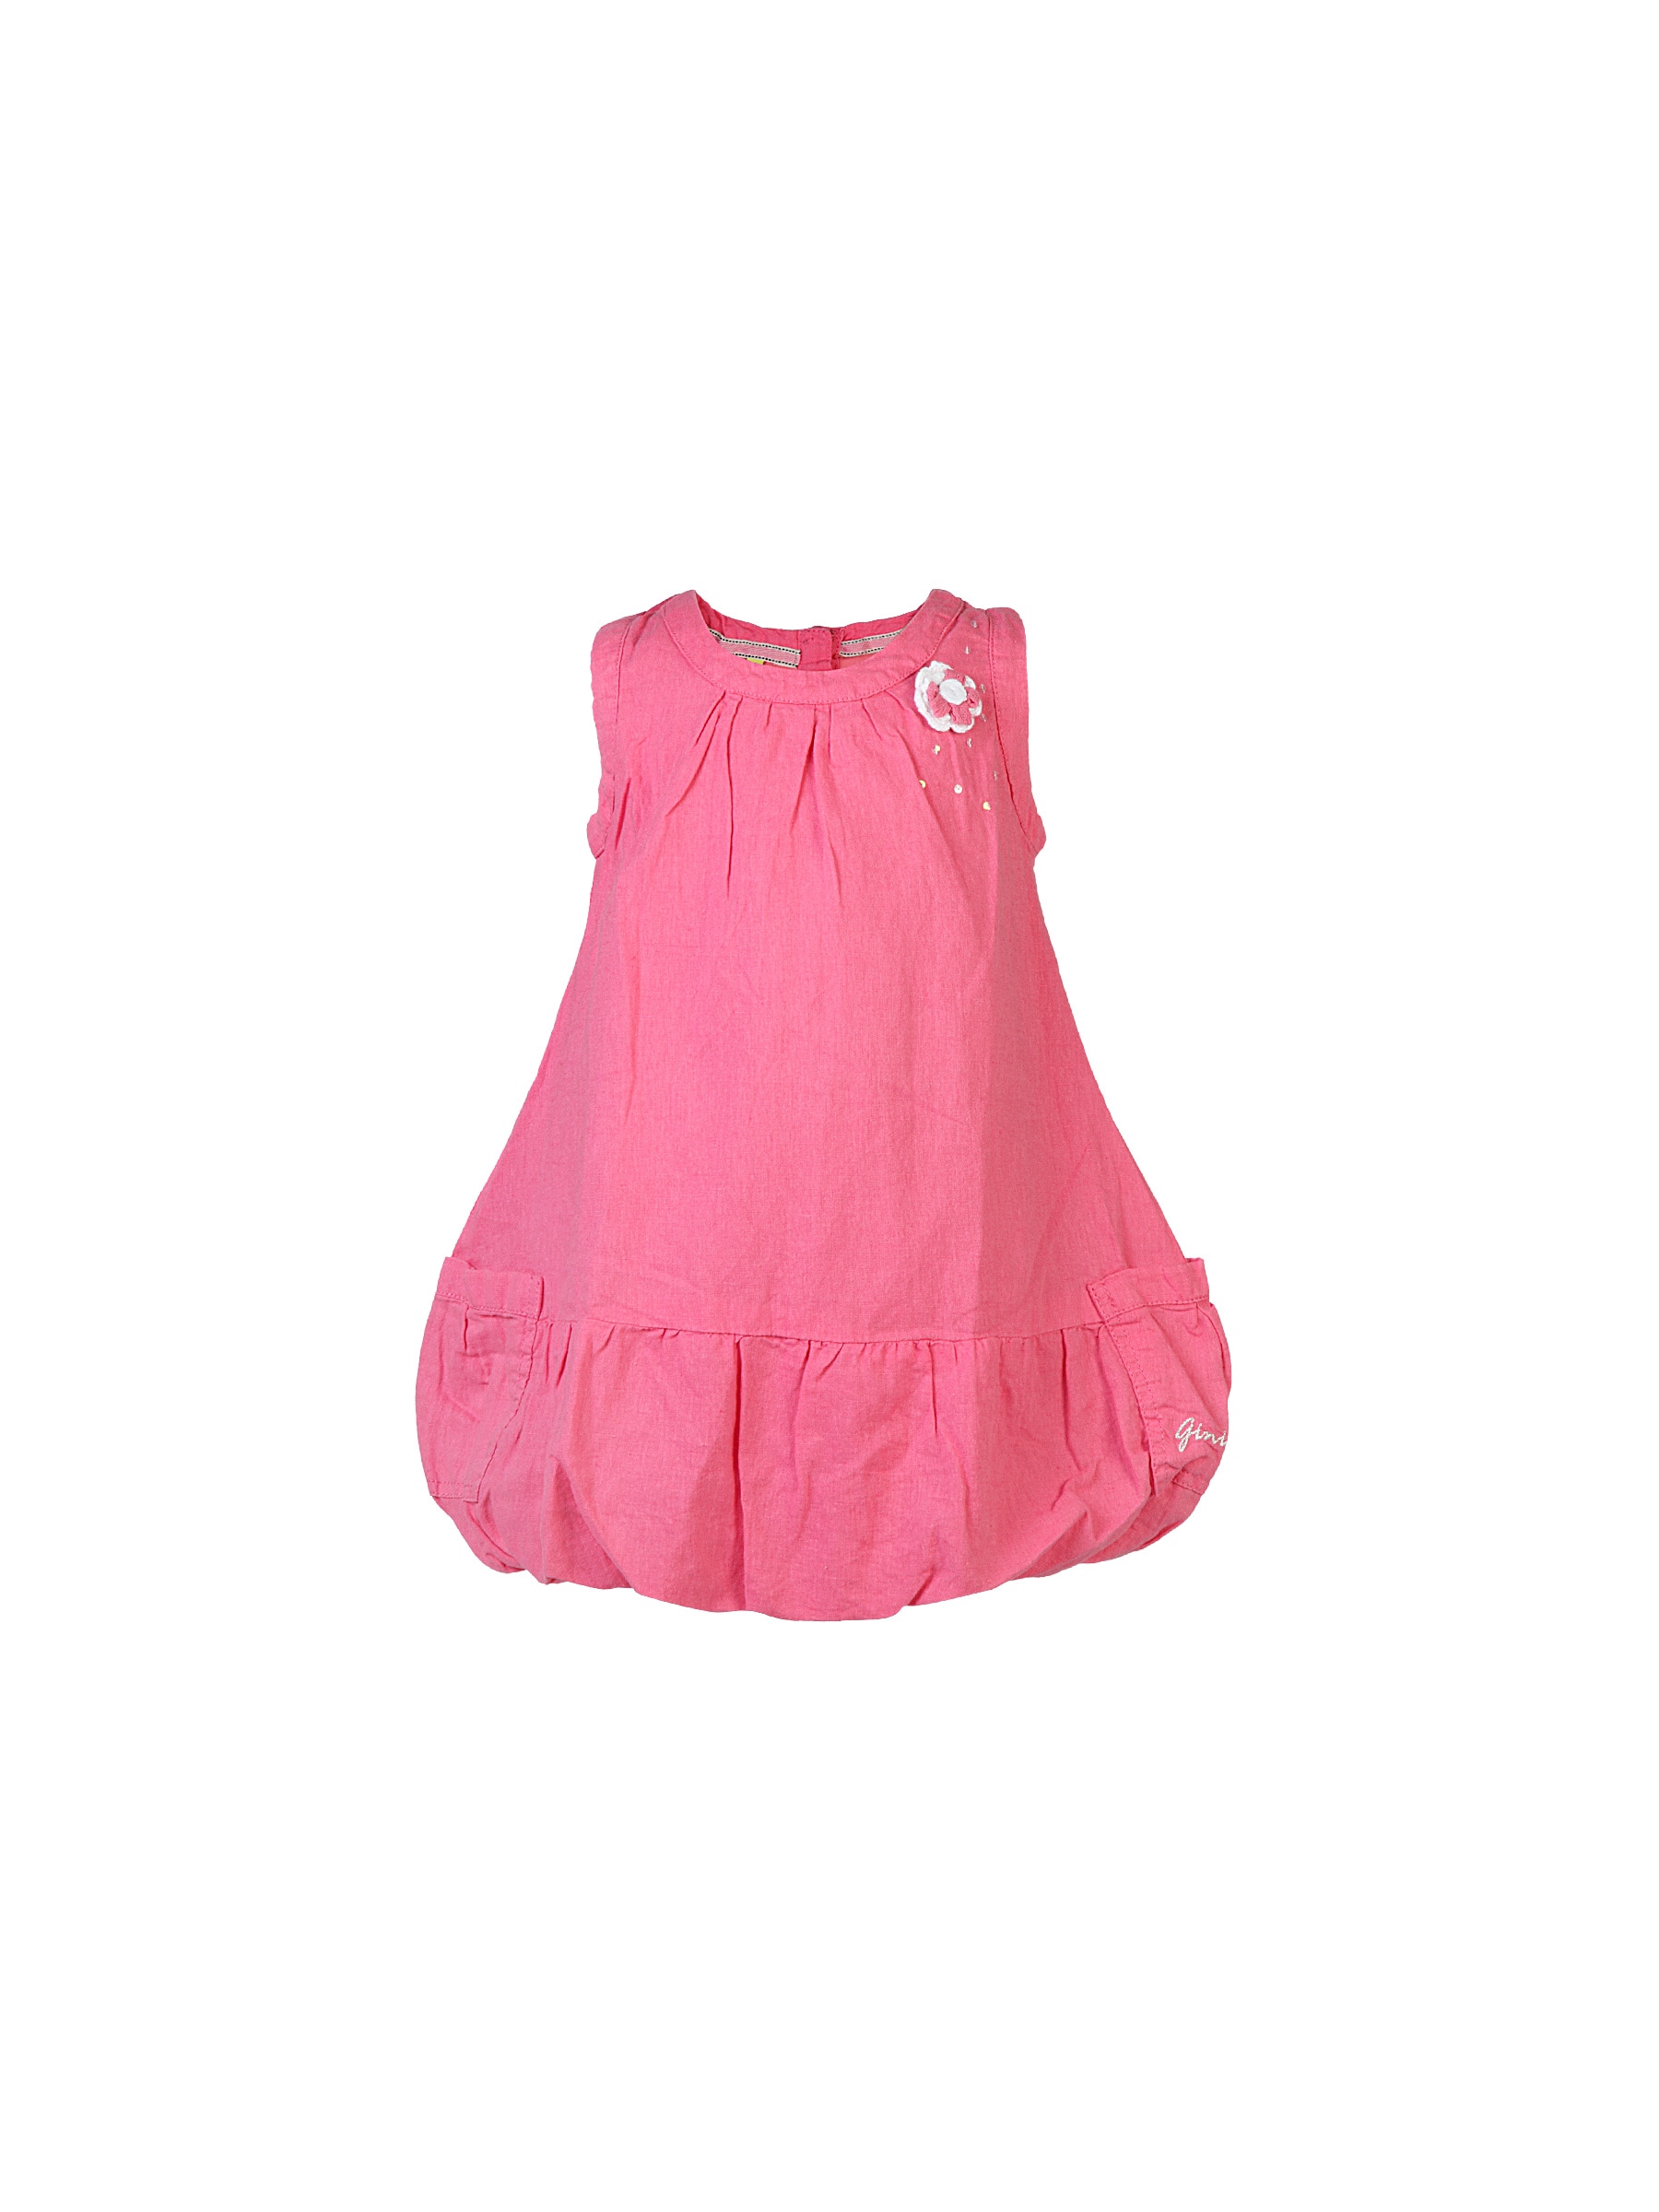 Gini and Jony Kids Girls Solid Pink Dresses